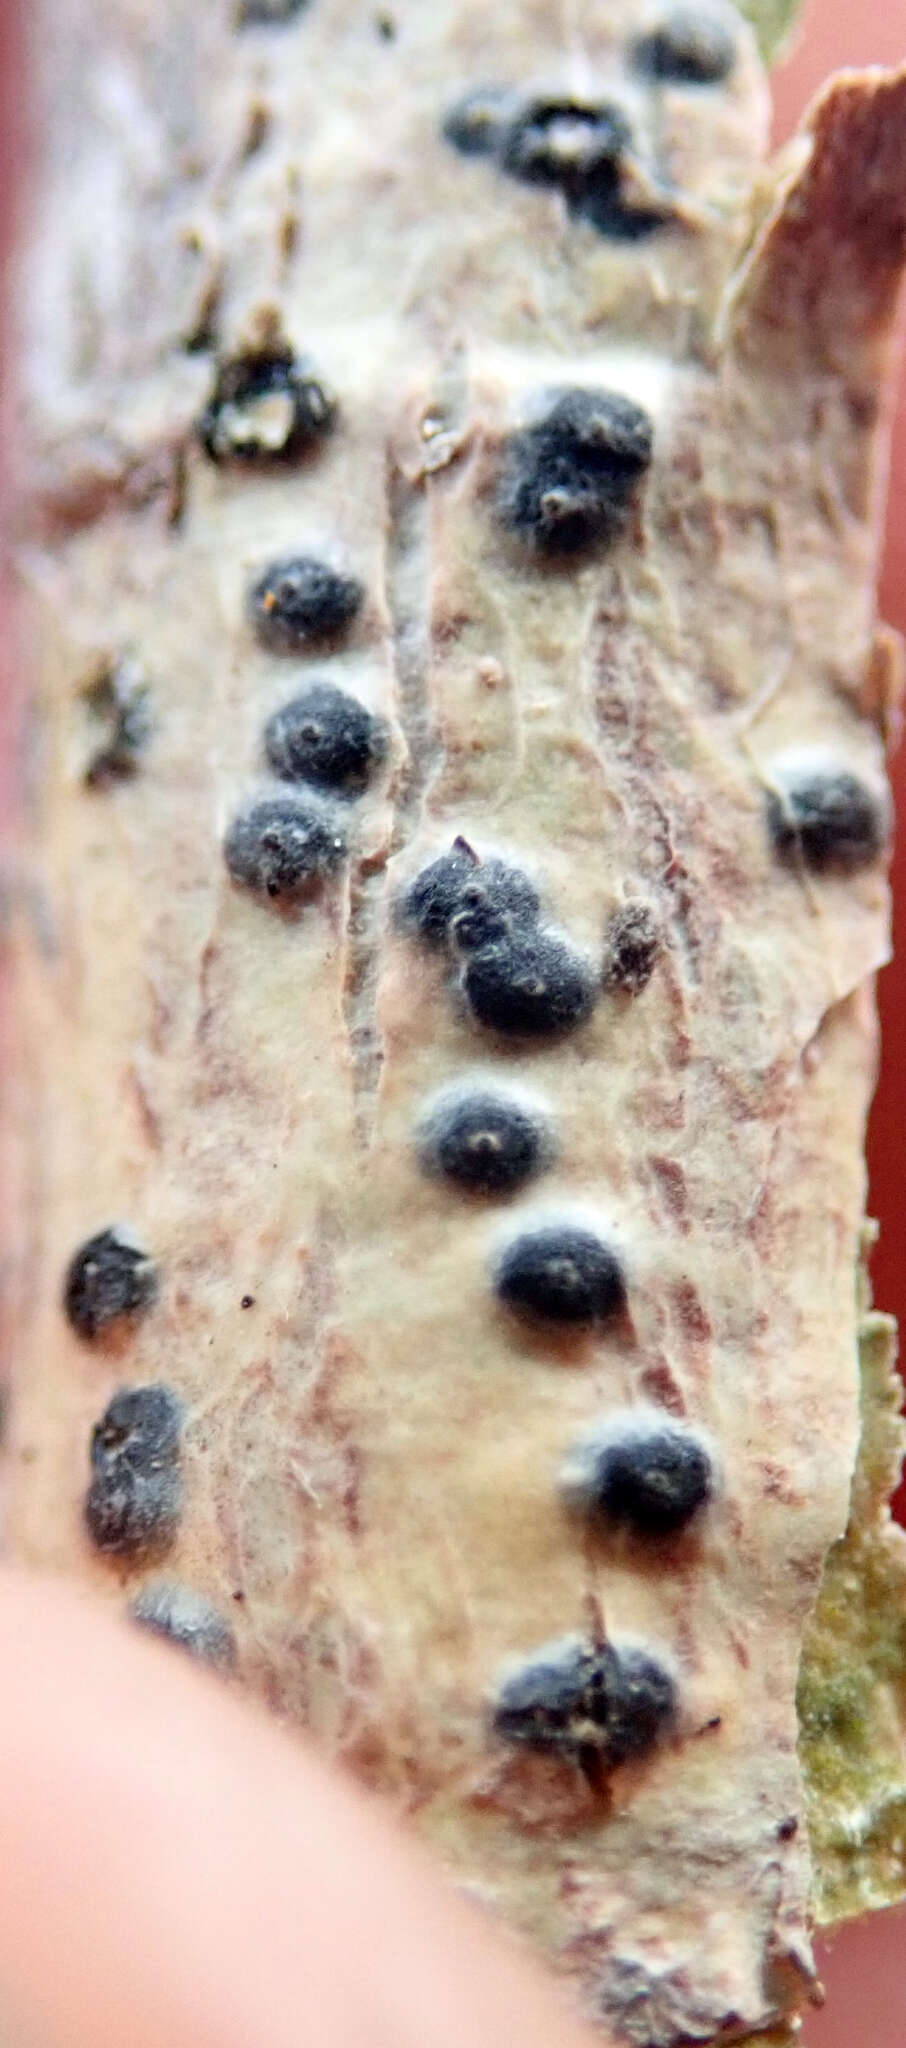 Image de Pyrenula dermatodes (Borrer) Schaer.